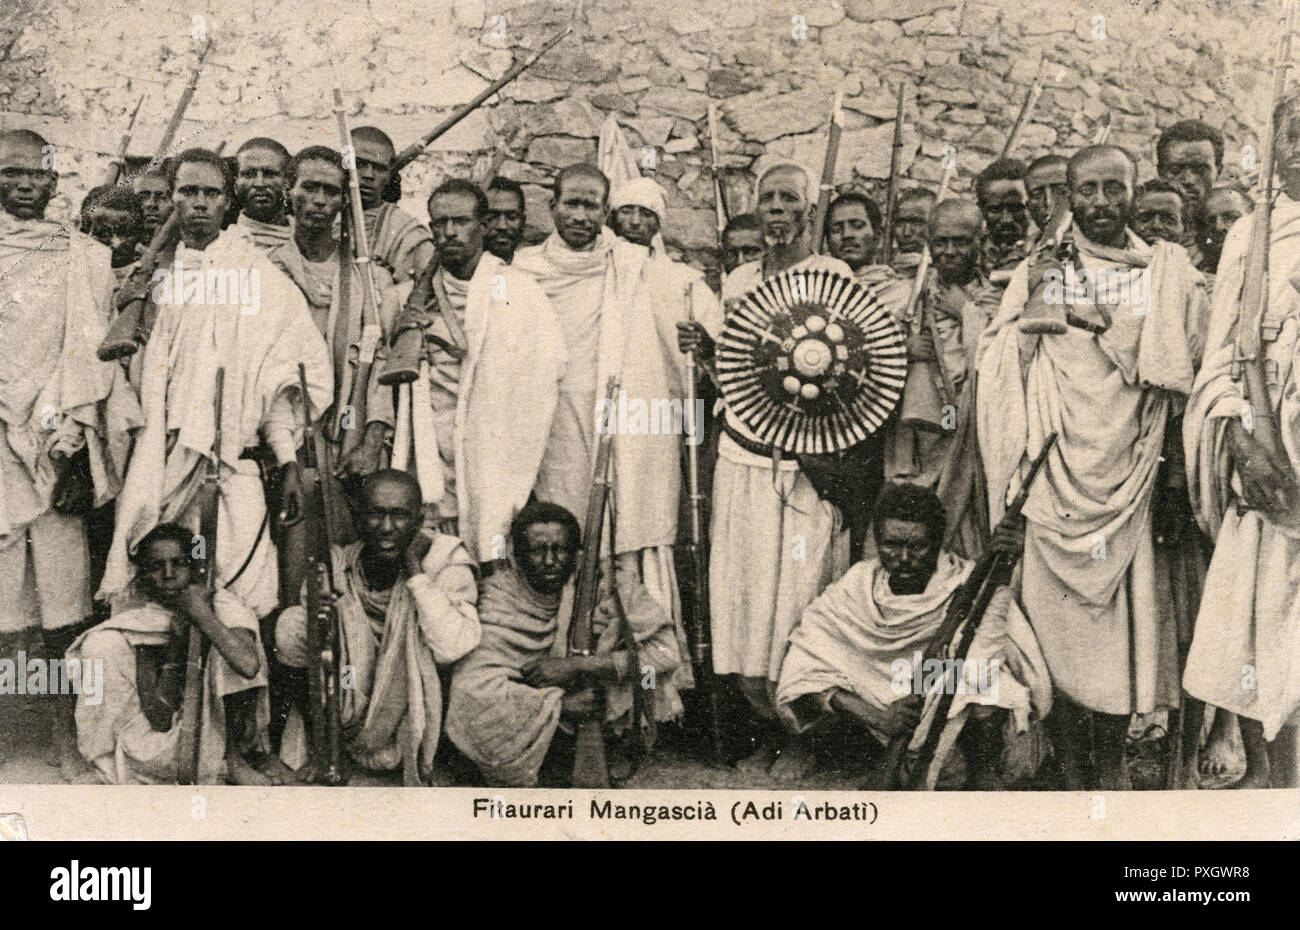 Ethiopian Chief Fitaurari Mangasha and his warriors Stock Photo